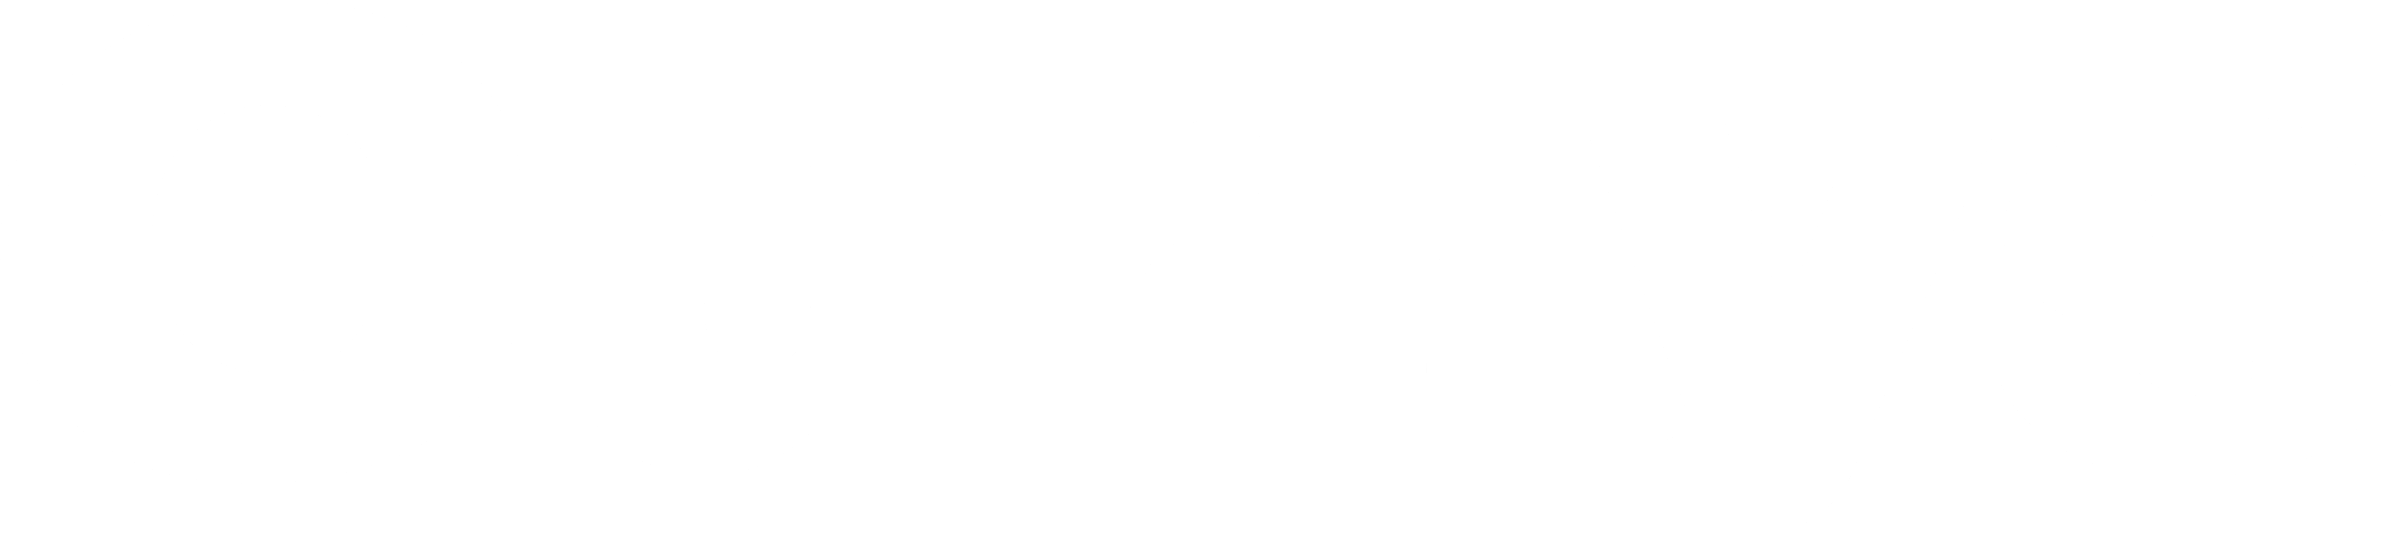 https://www.macfarlanepackaging.com/wp-content/uploads/2017/09/currys-logo-logo-black-and-white.png